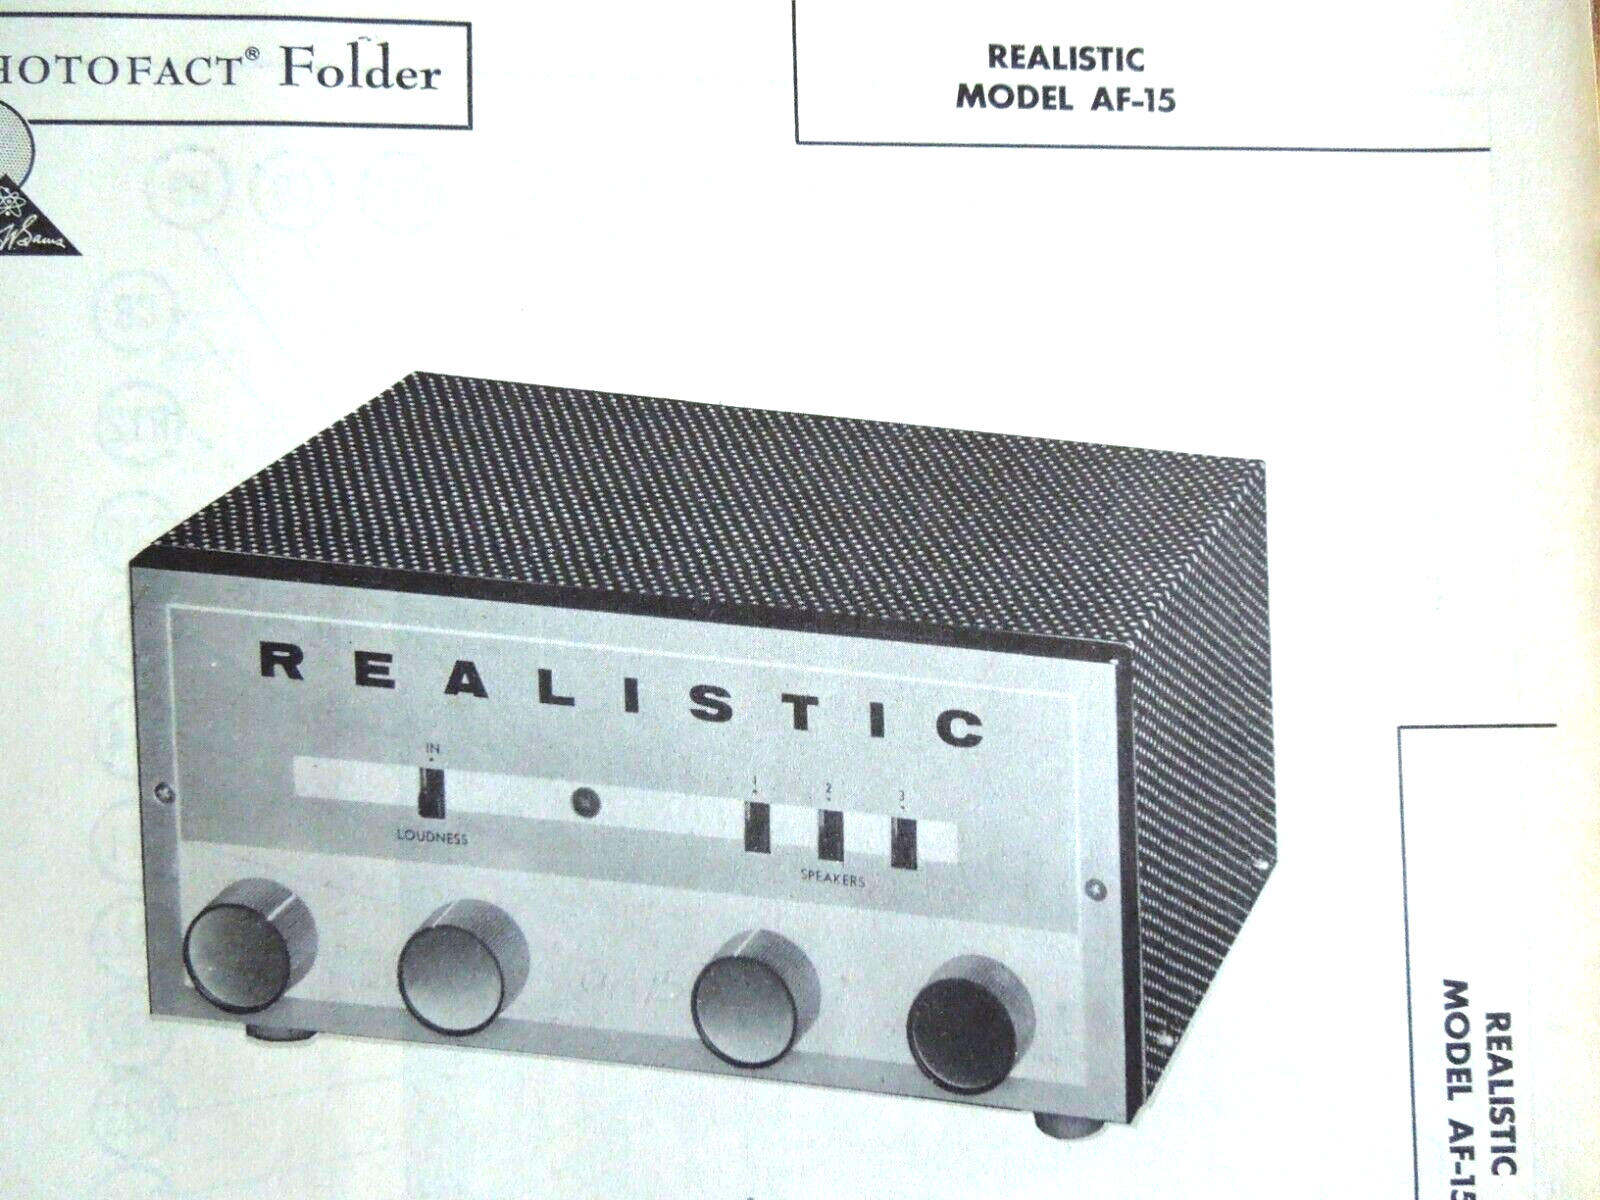 Original Sams Photofact Manual  REALISTIC AF-15 (500)